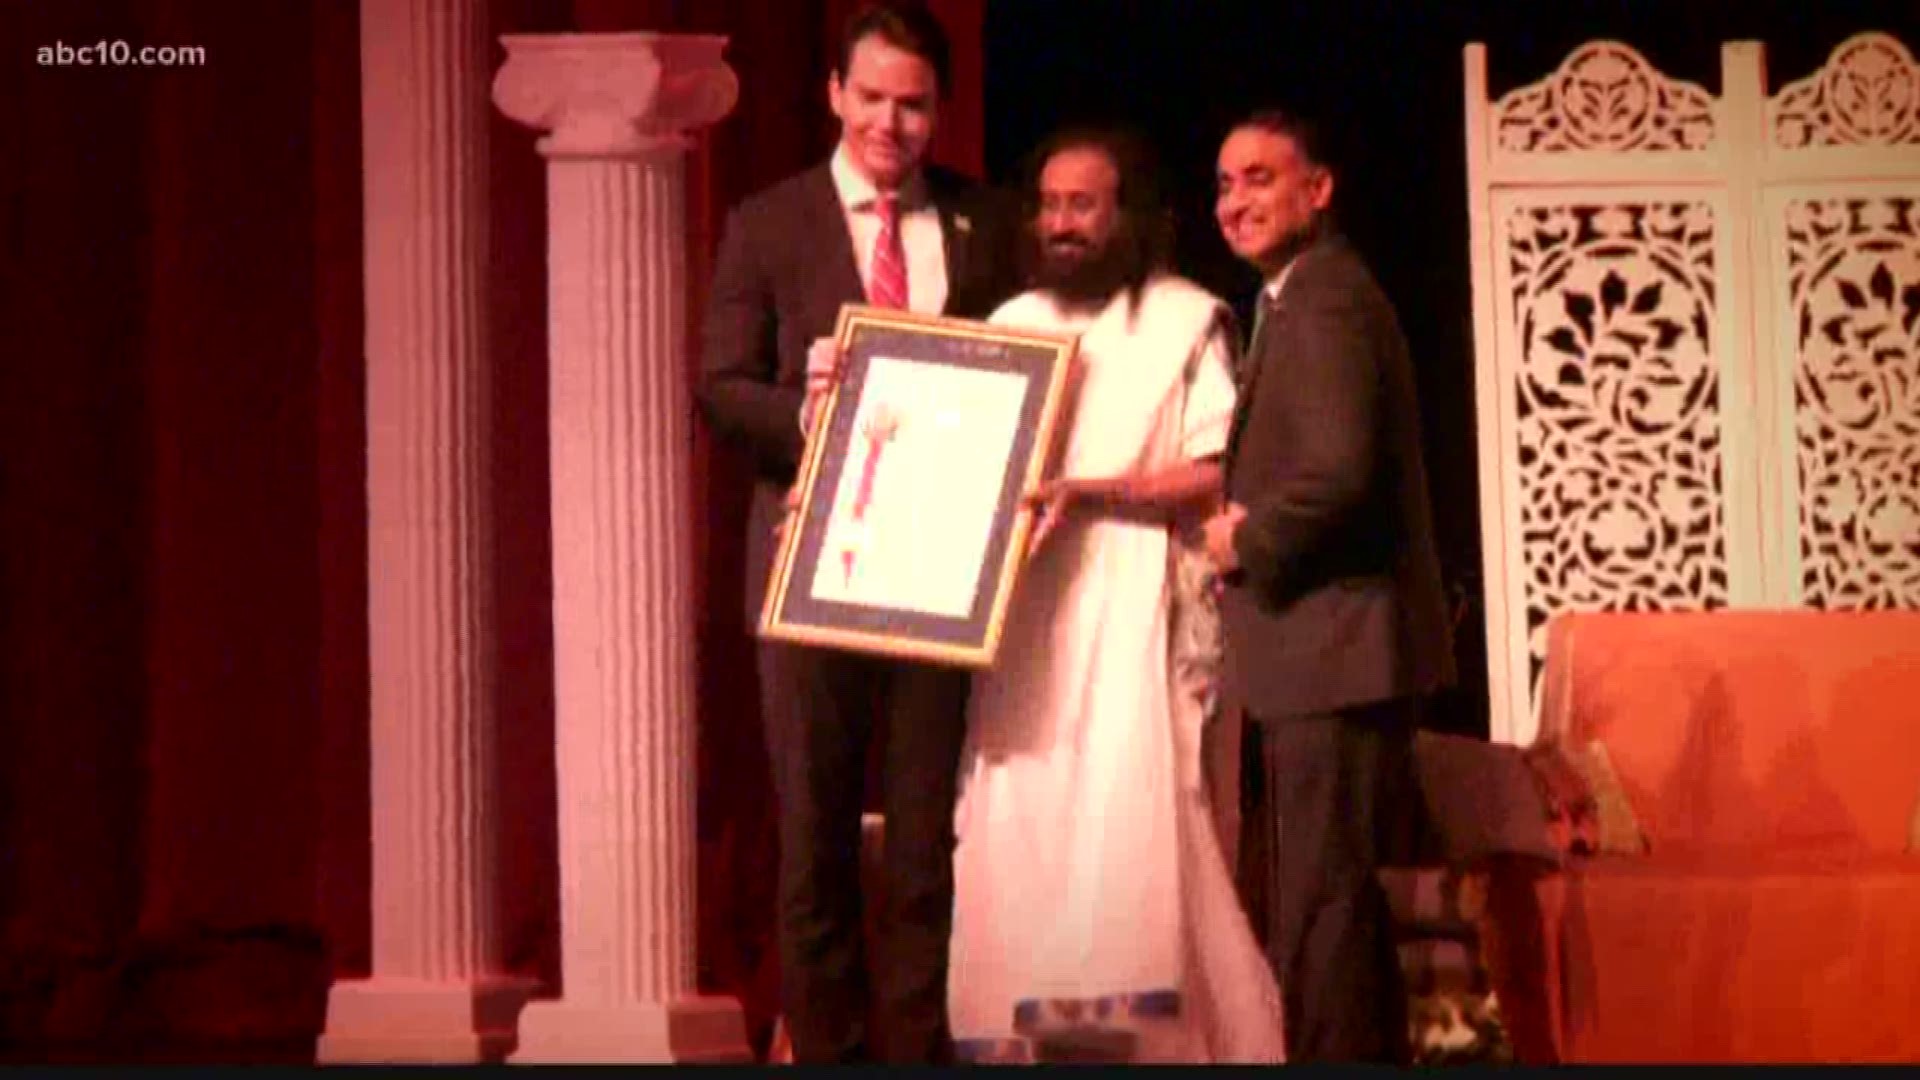 World-renowned spiritual guru Sri Sri Ravi Shankar hosted an event in Sacramento Monday night.